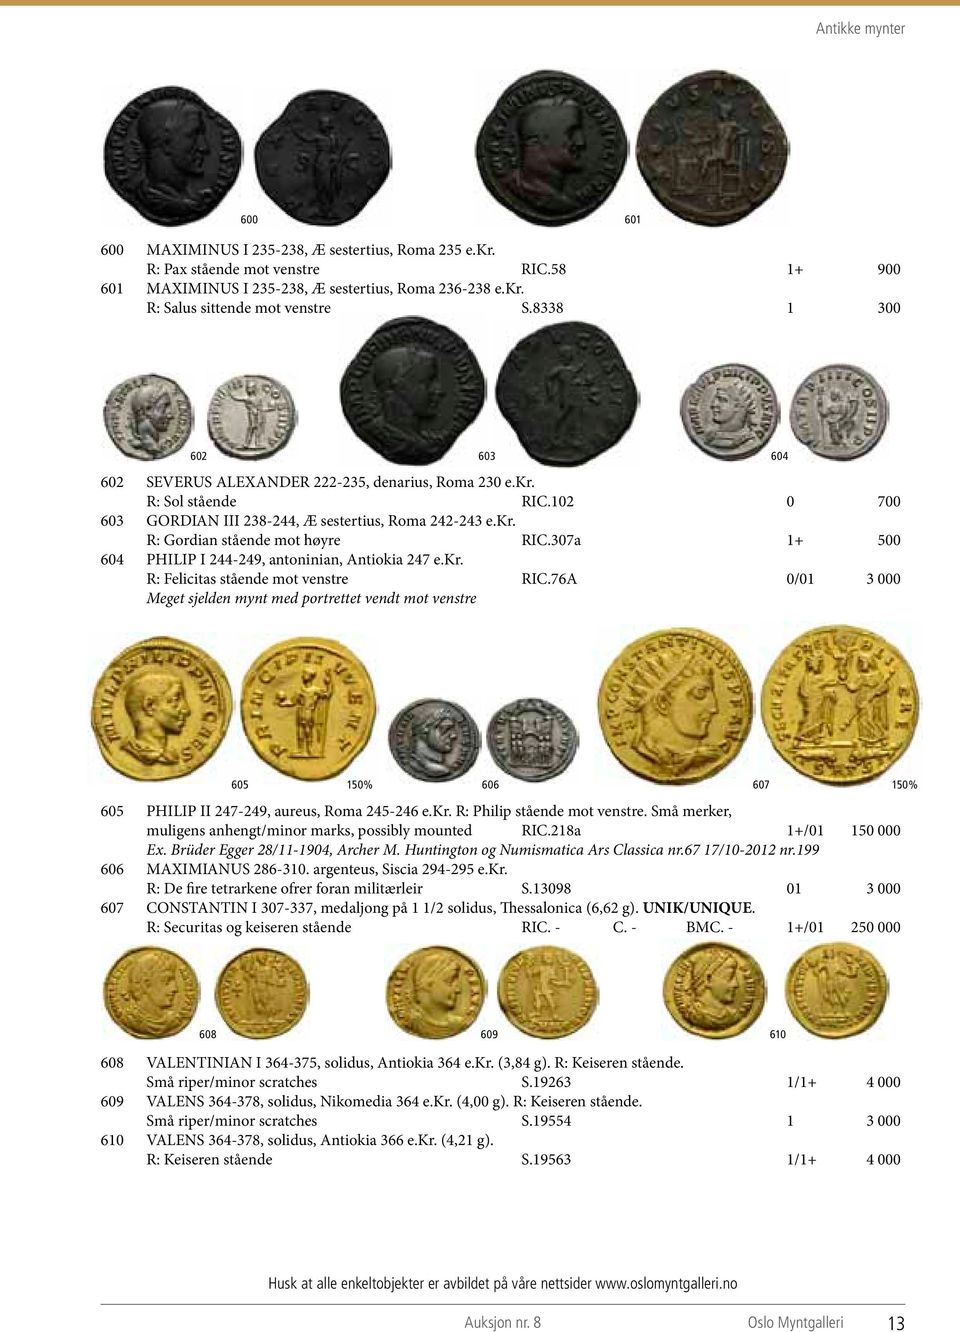 307a 1+ 500 604 PHILIP I 244-249, antoninian, Antiokia 247 e.kr. R: Felicitas stående mot venstre RIC.